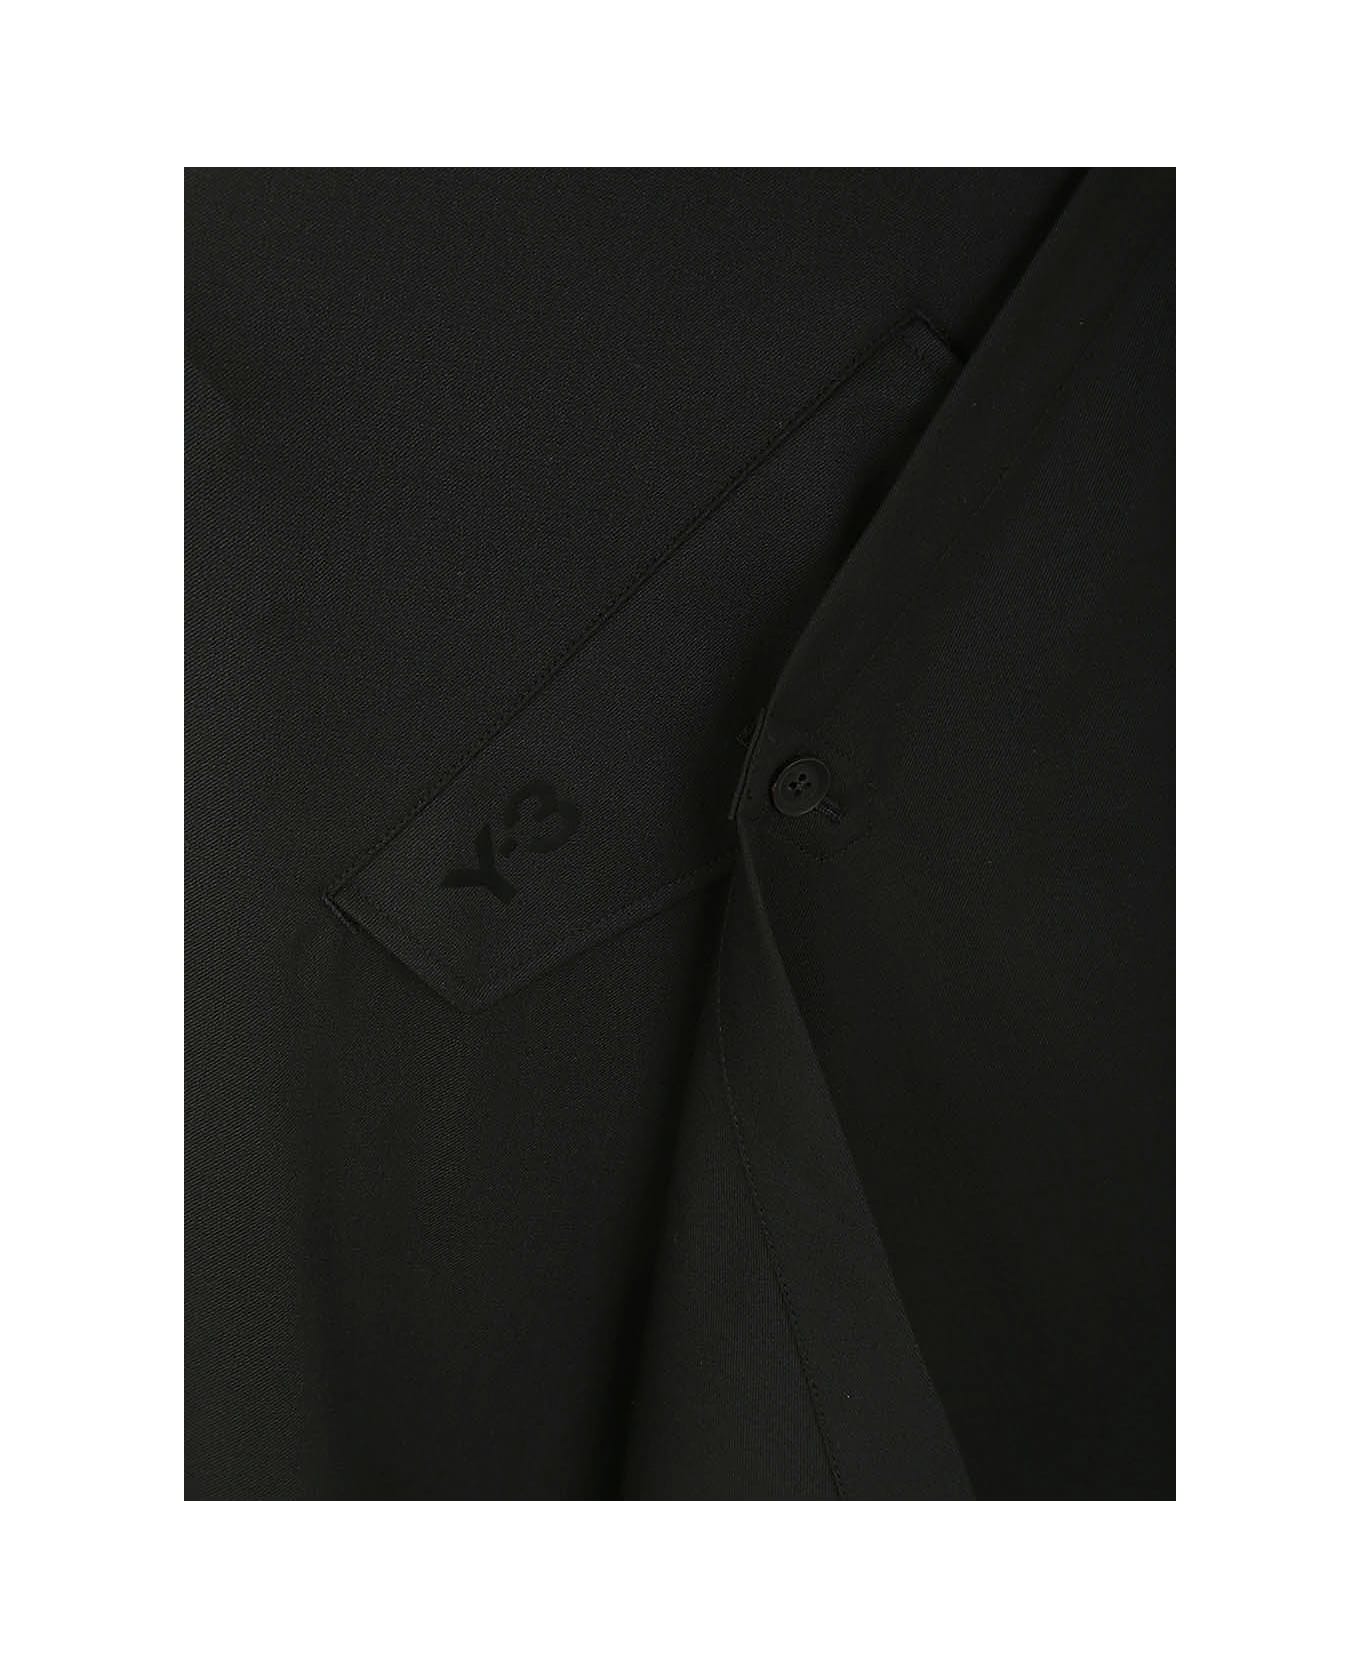 Y-3 Long Skirt - Black スカート